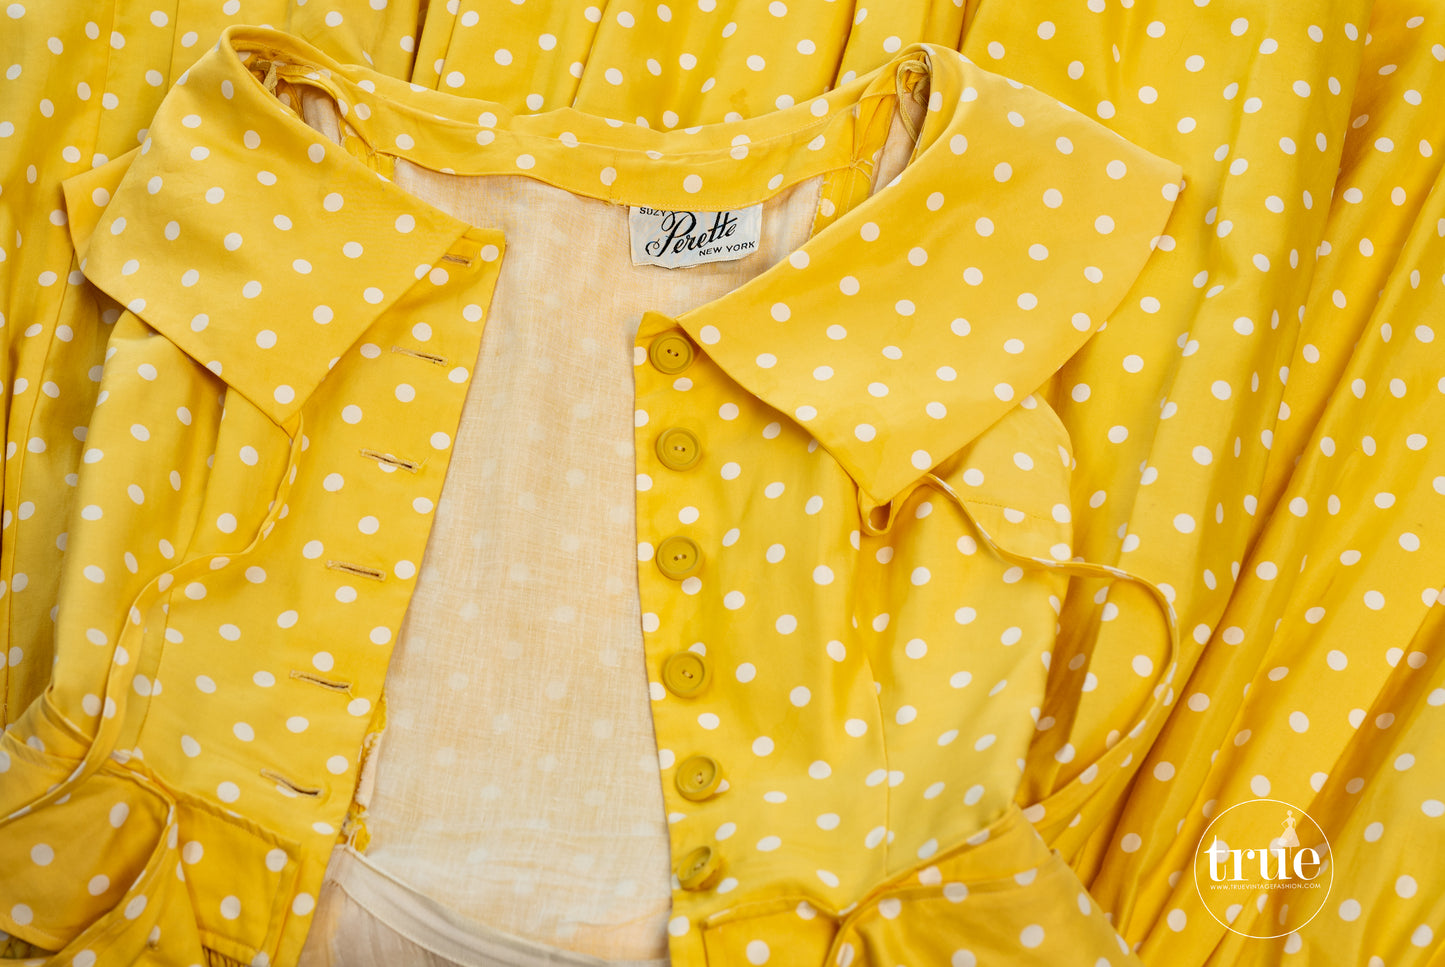 1950's Suzy Perette yellow polka dot dress